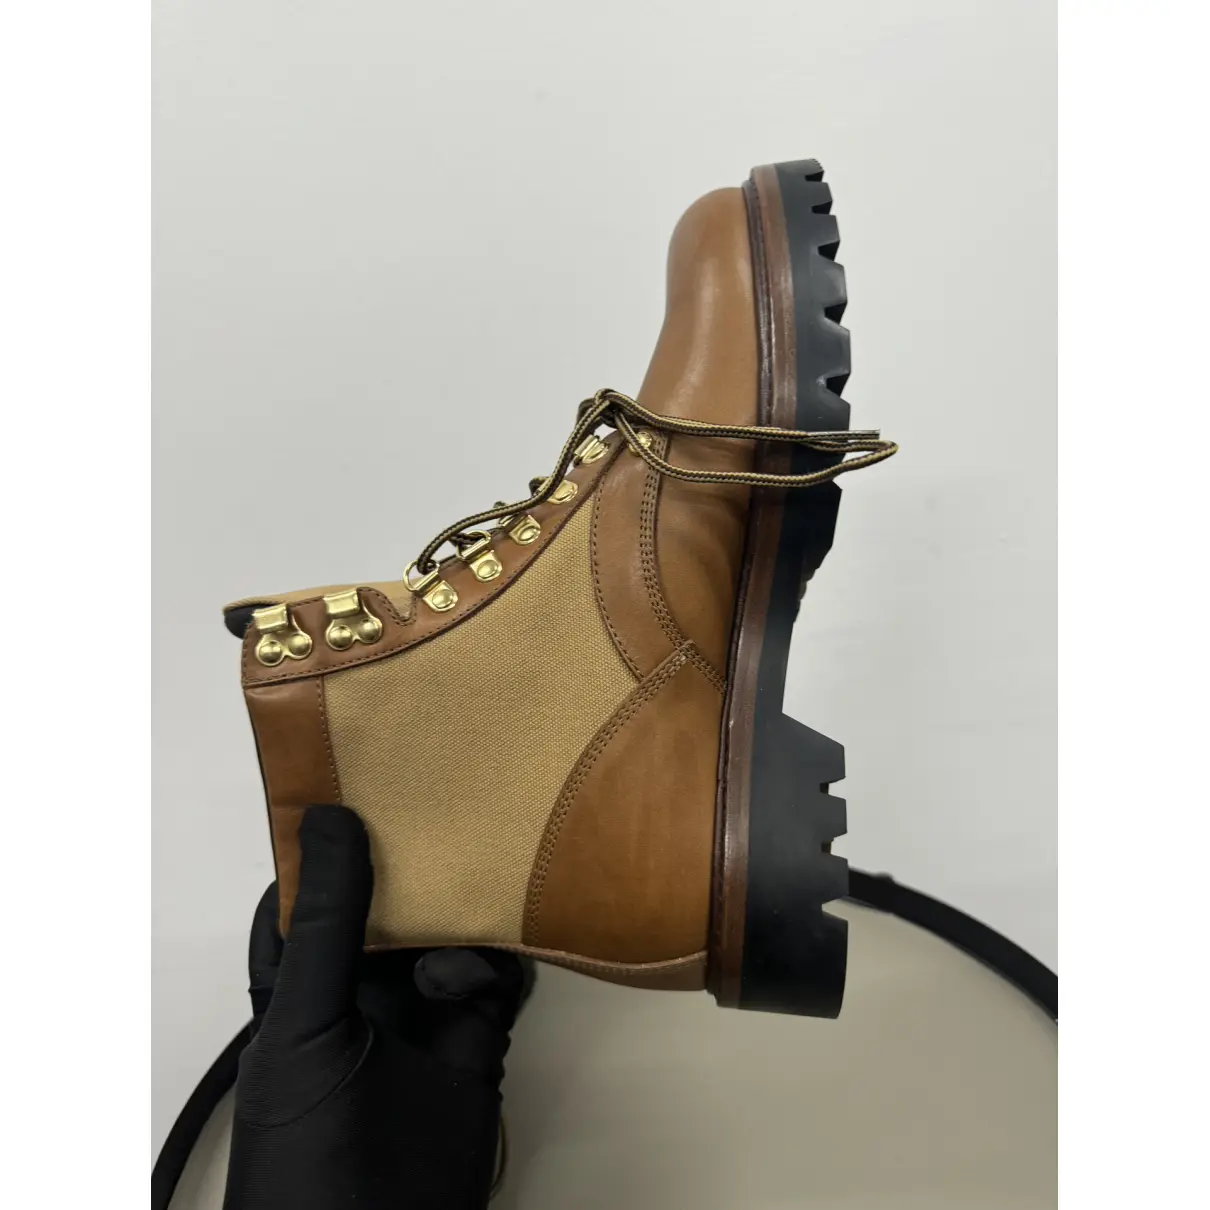 Oberkampf leather boots Louis Vuitton